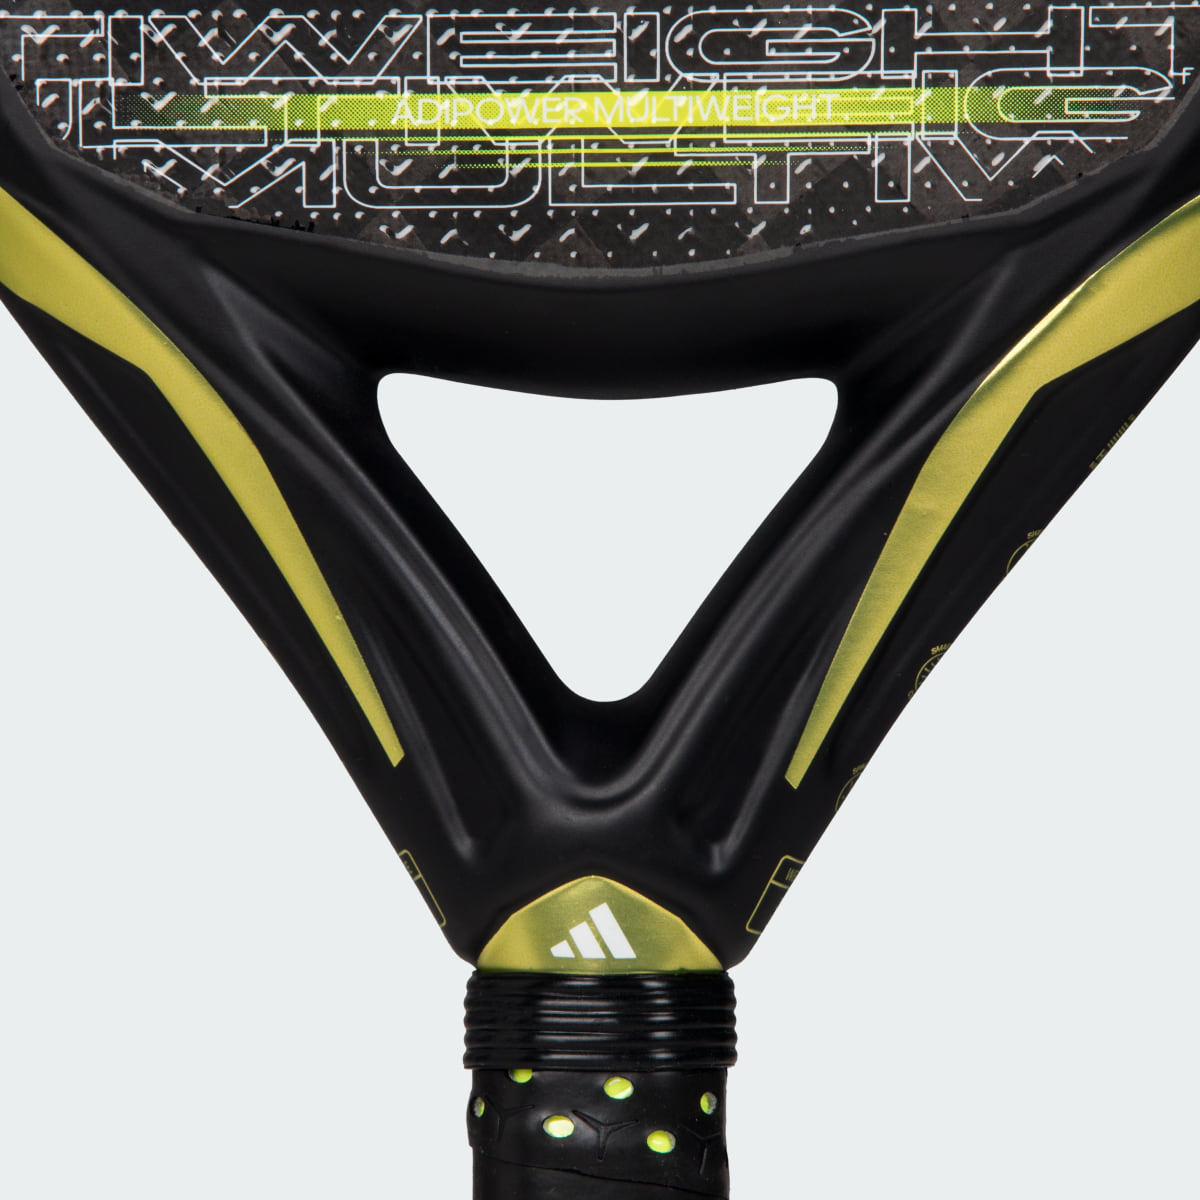 Adidas Adipower Multiweight 3.3 Padel Racket. 5